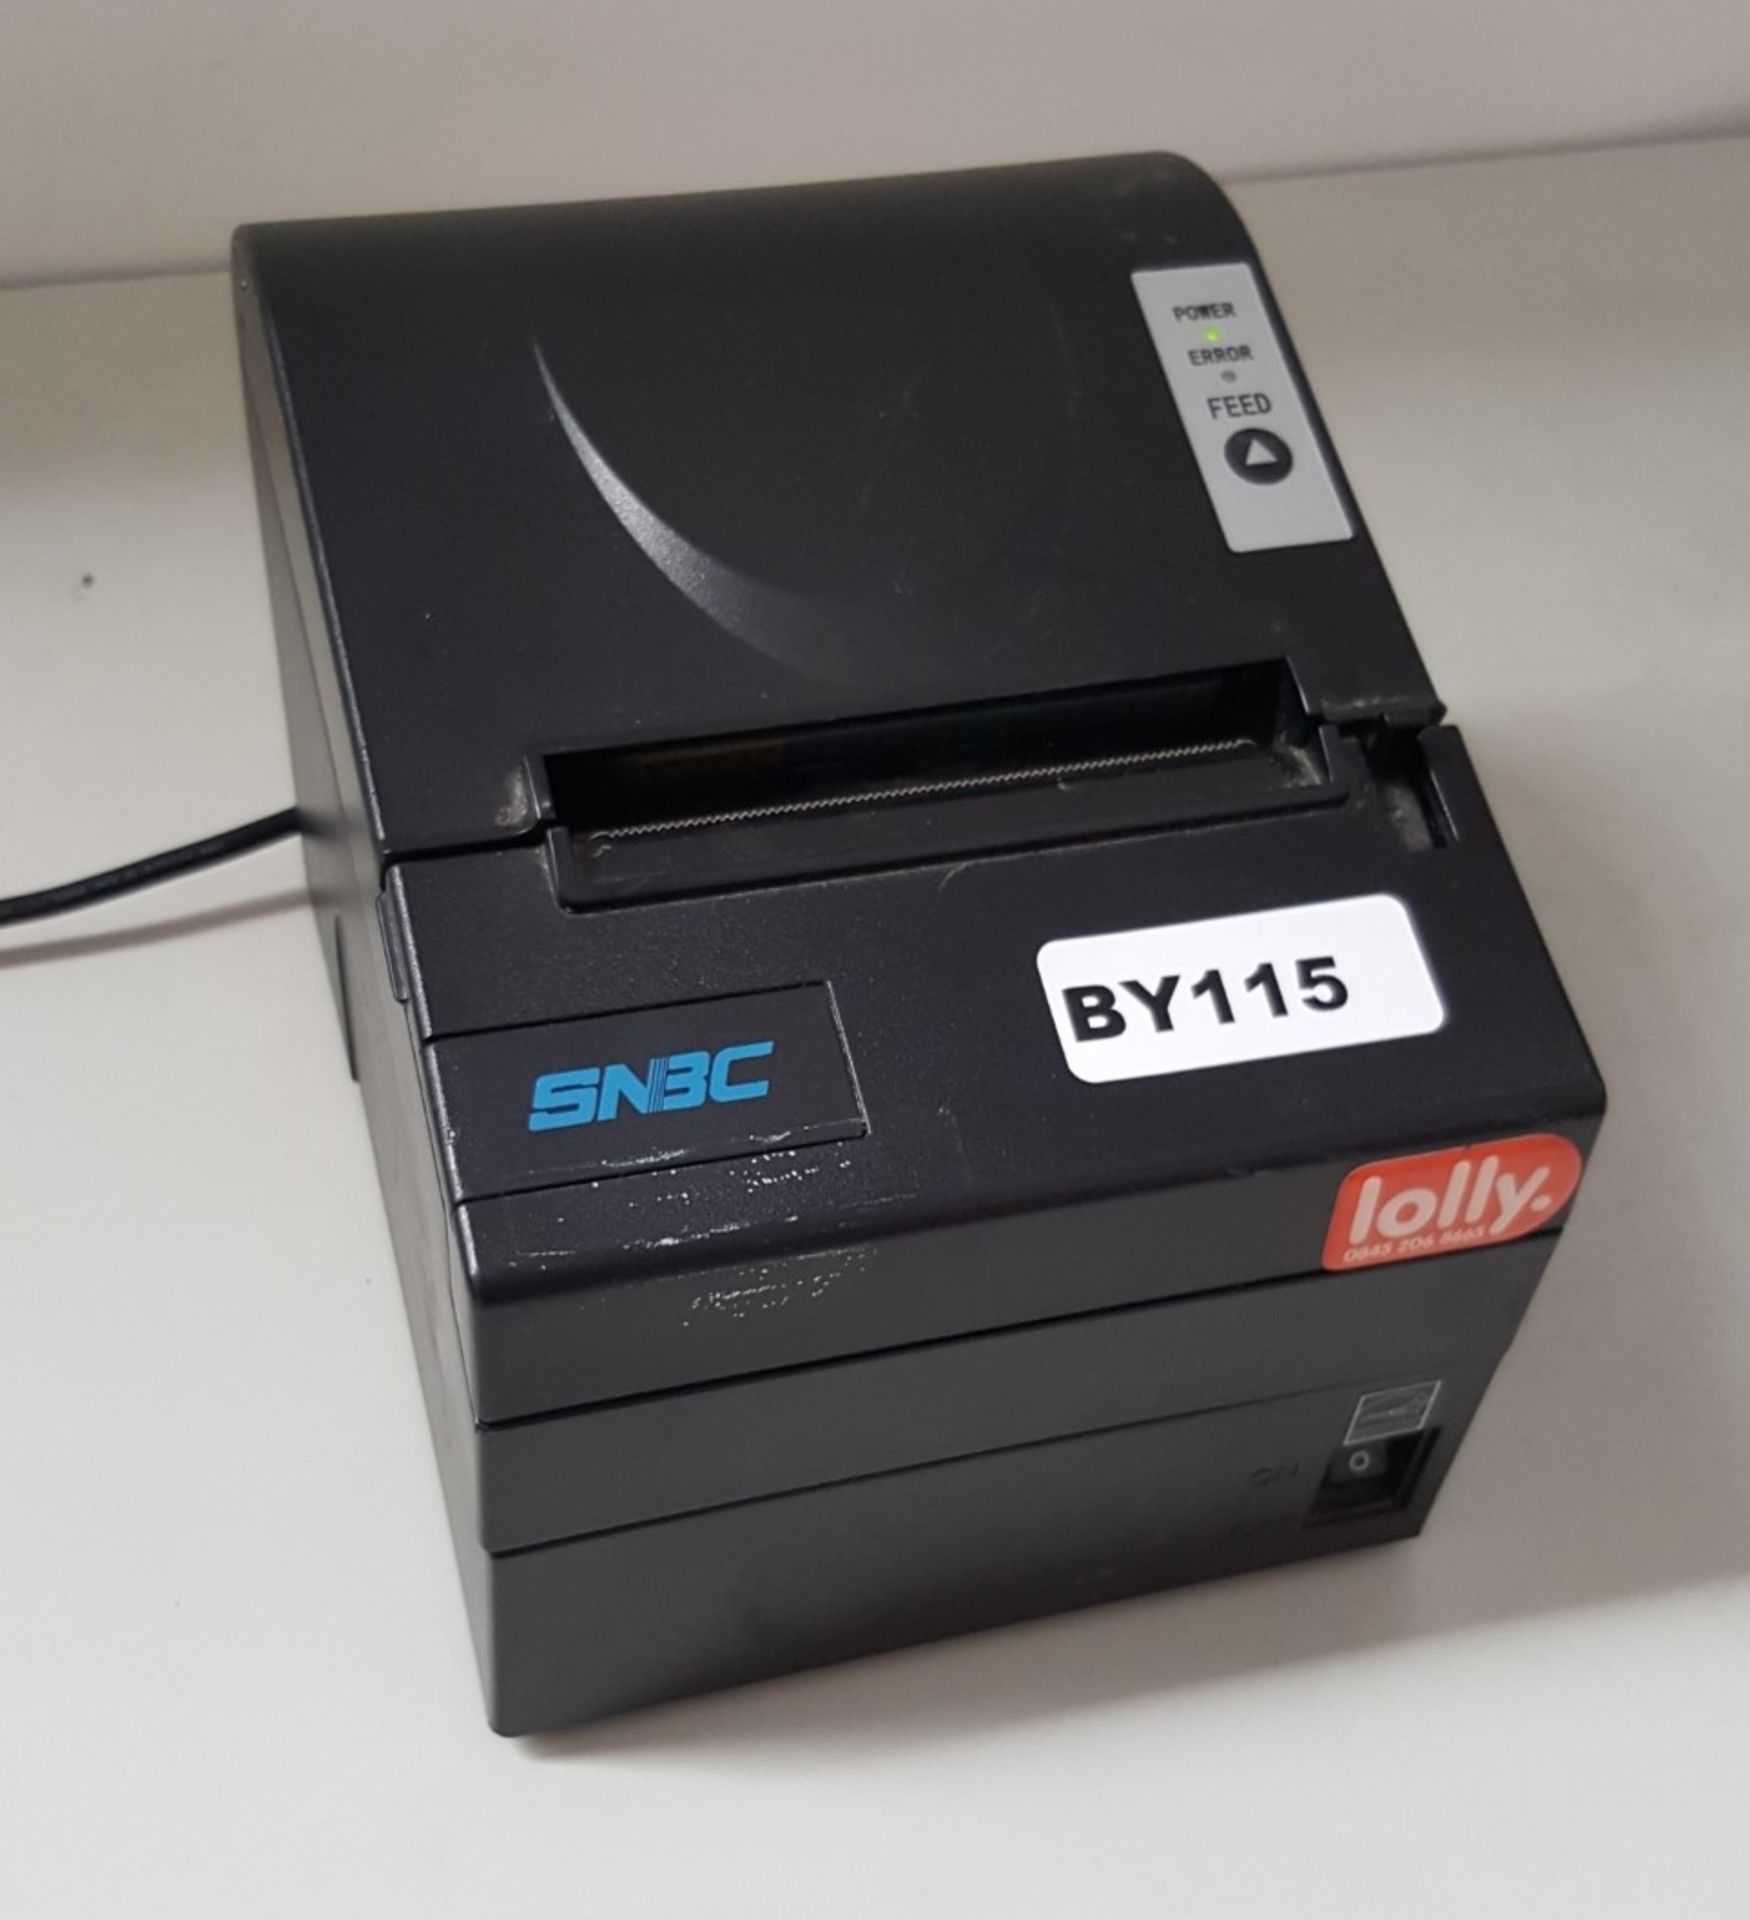 1 x SNBC BTP-R880NP USB Thermal Receipt Printer - Ref BY115 AC3